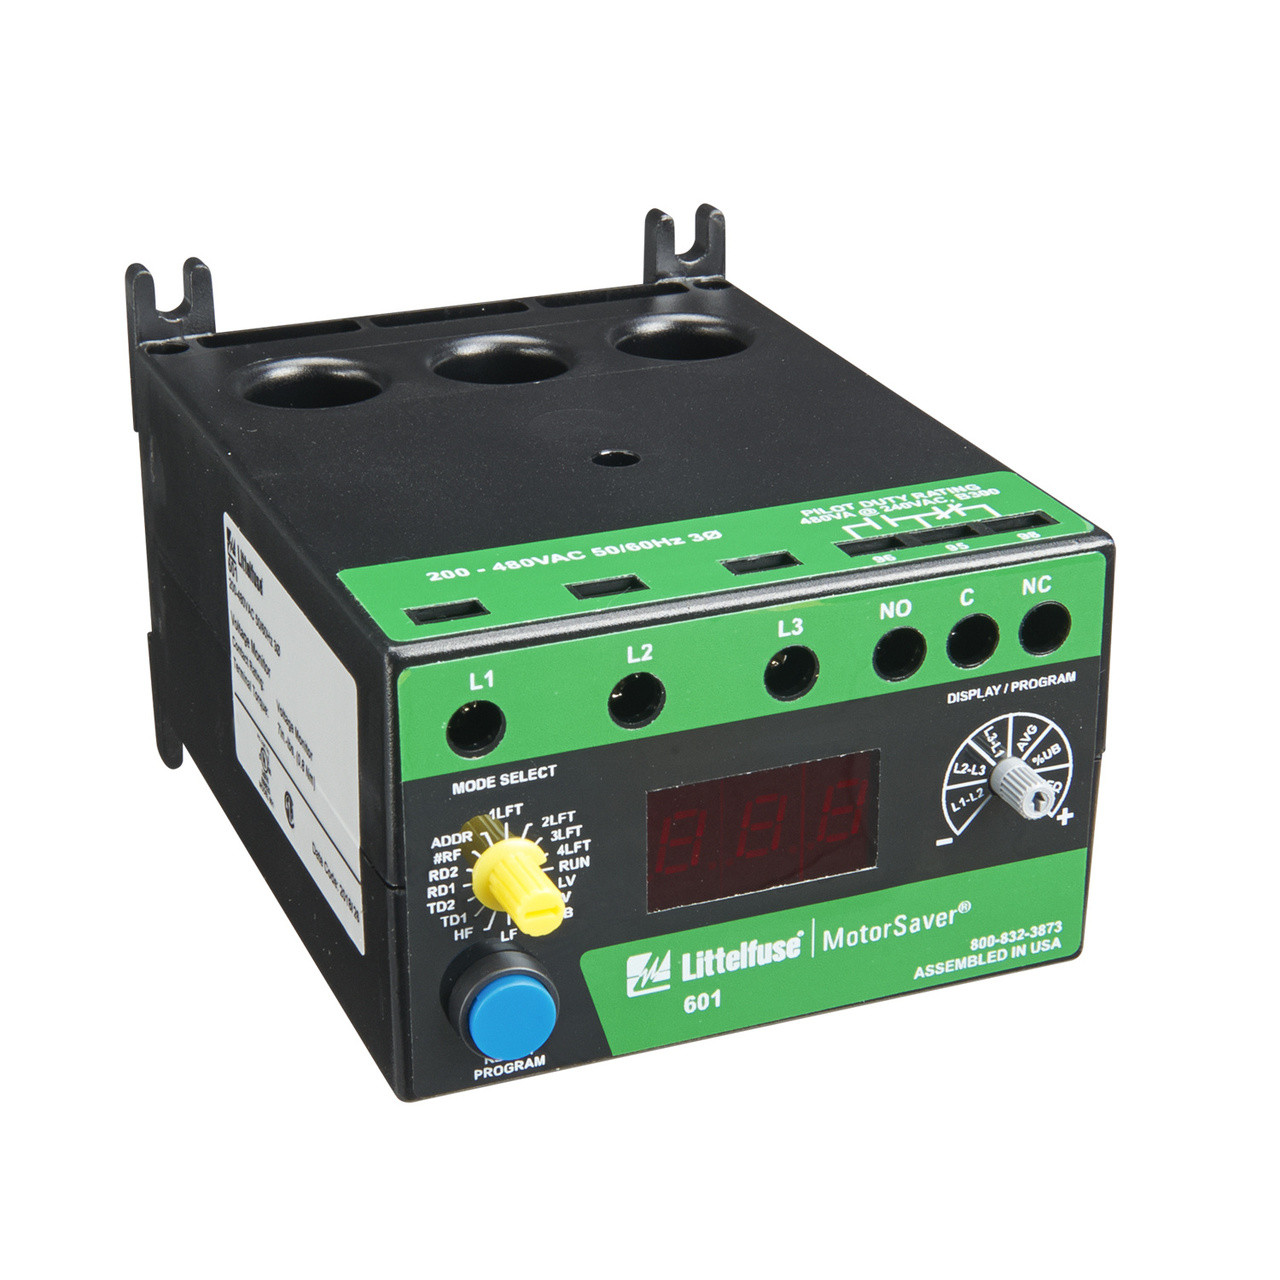 Littelfuse-Symcom 601 Voltage Monitor Relays